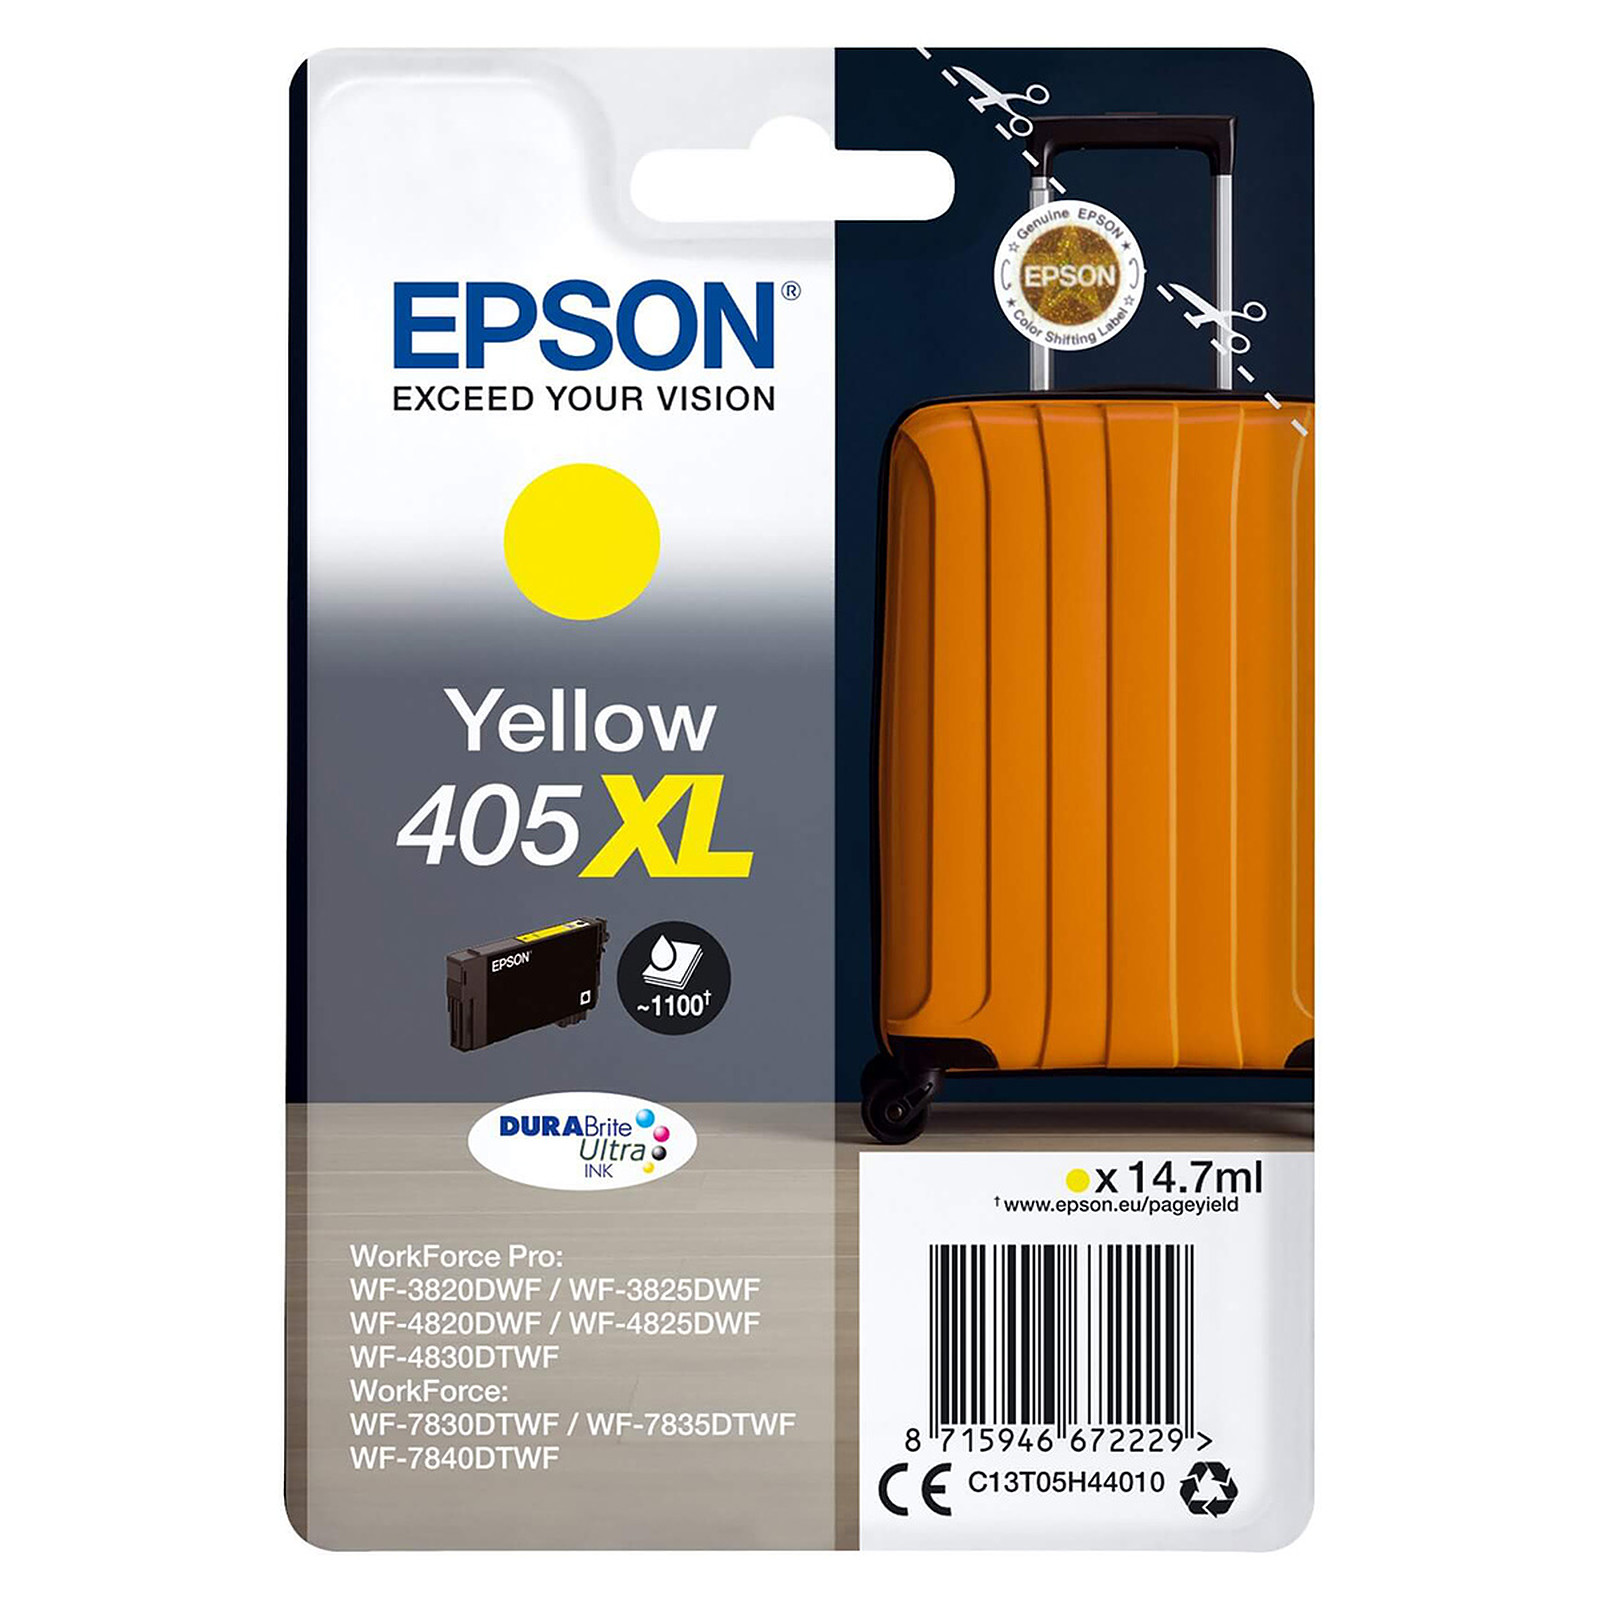 Epson Valise 405XL Jaune - Cartouche imprimante Epson